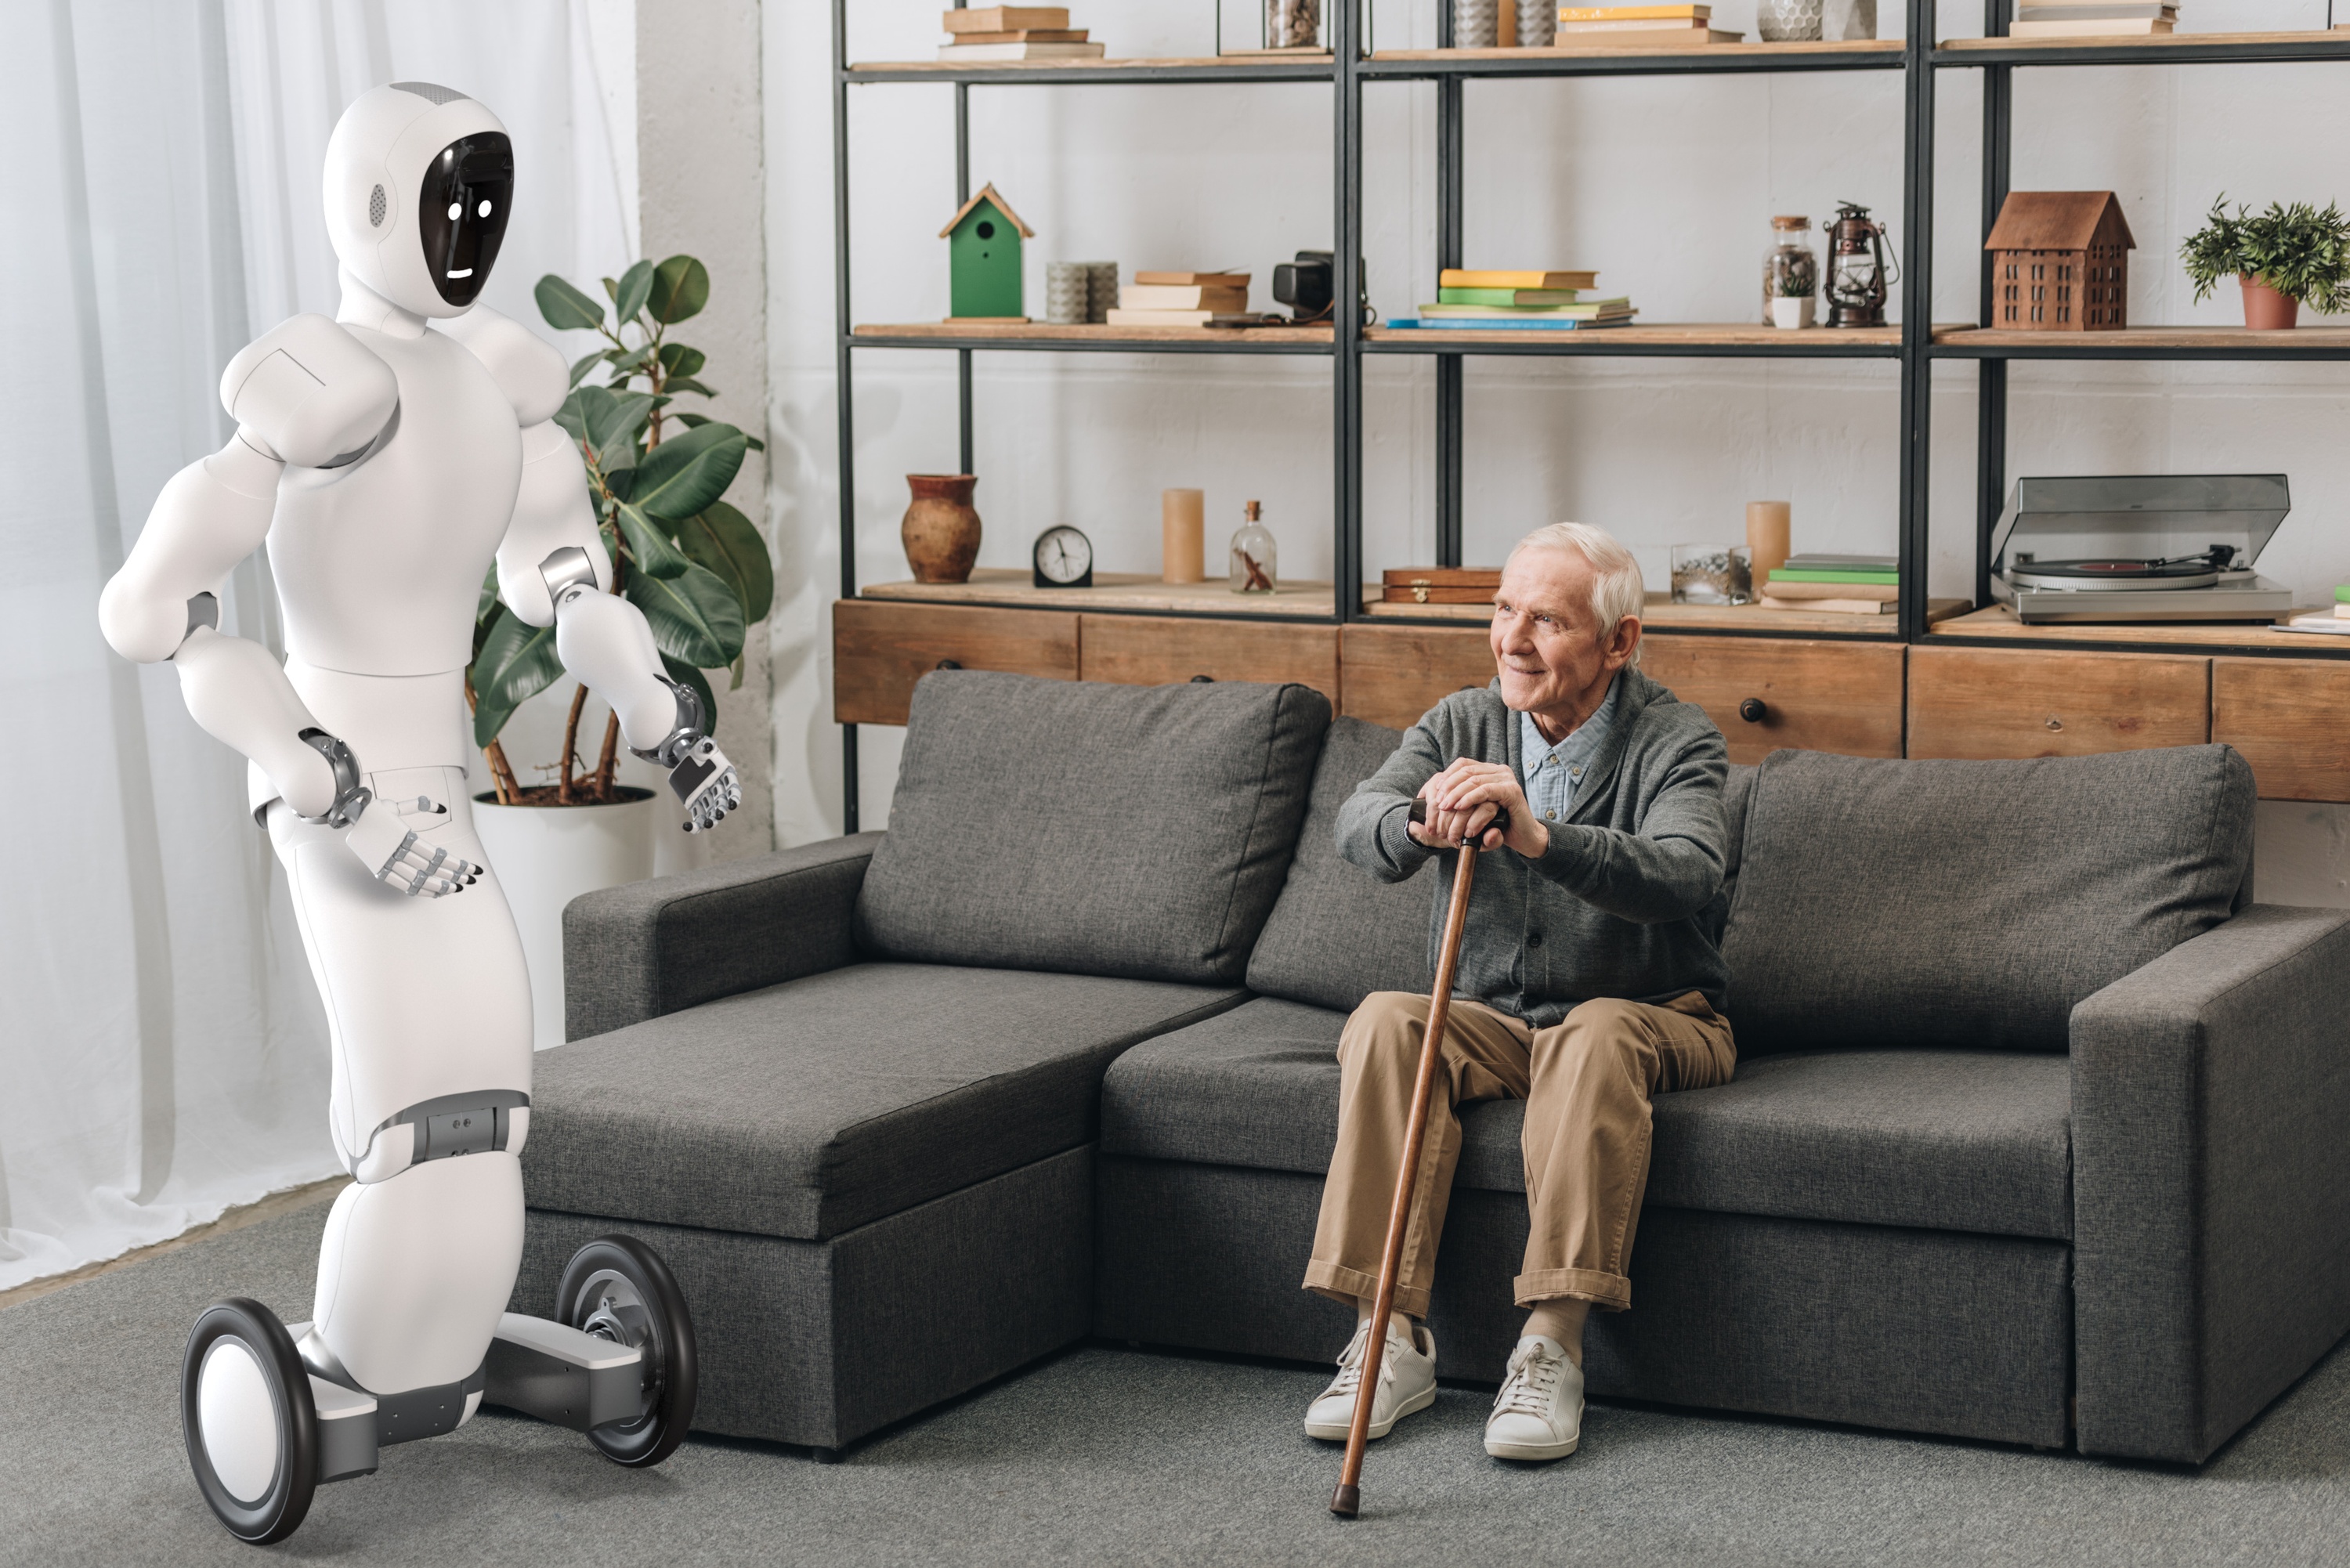 Silicon Valley Robotics, Monday, December 14, 2020, Press release picture